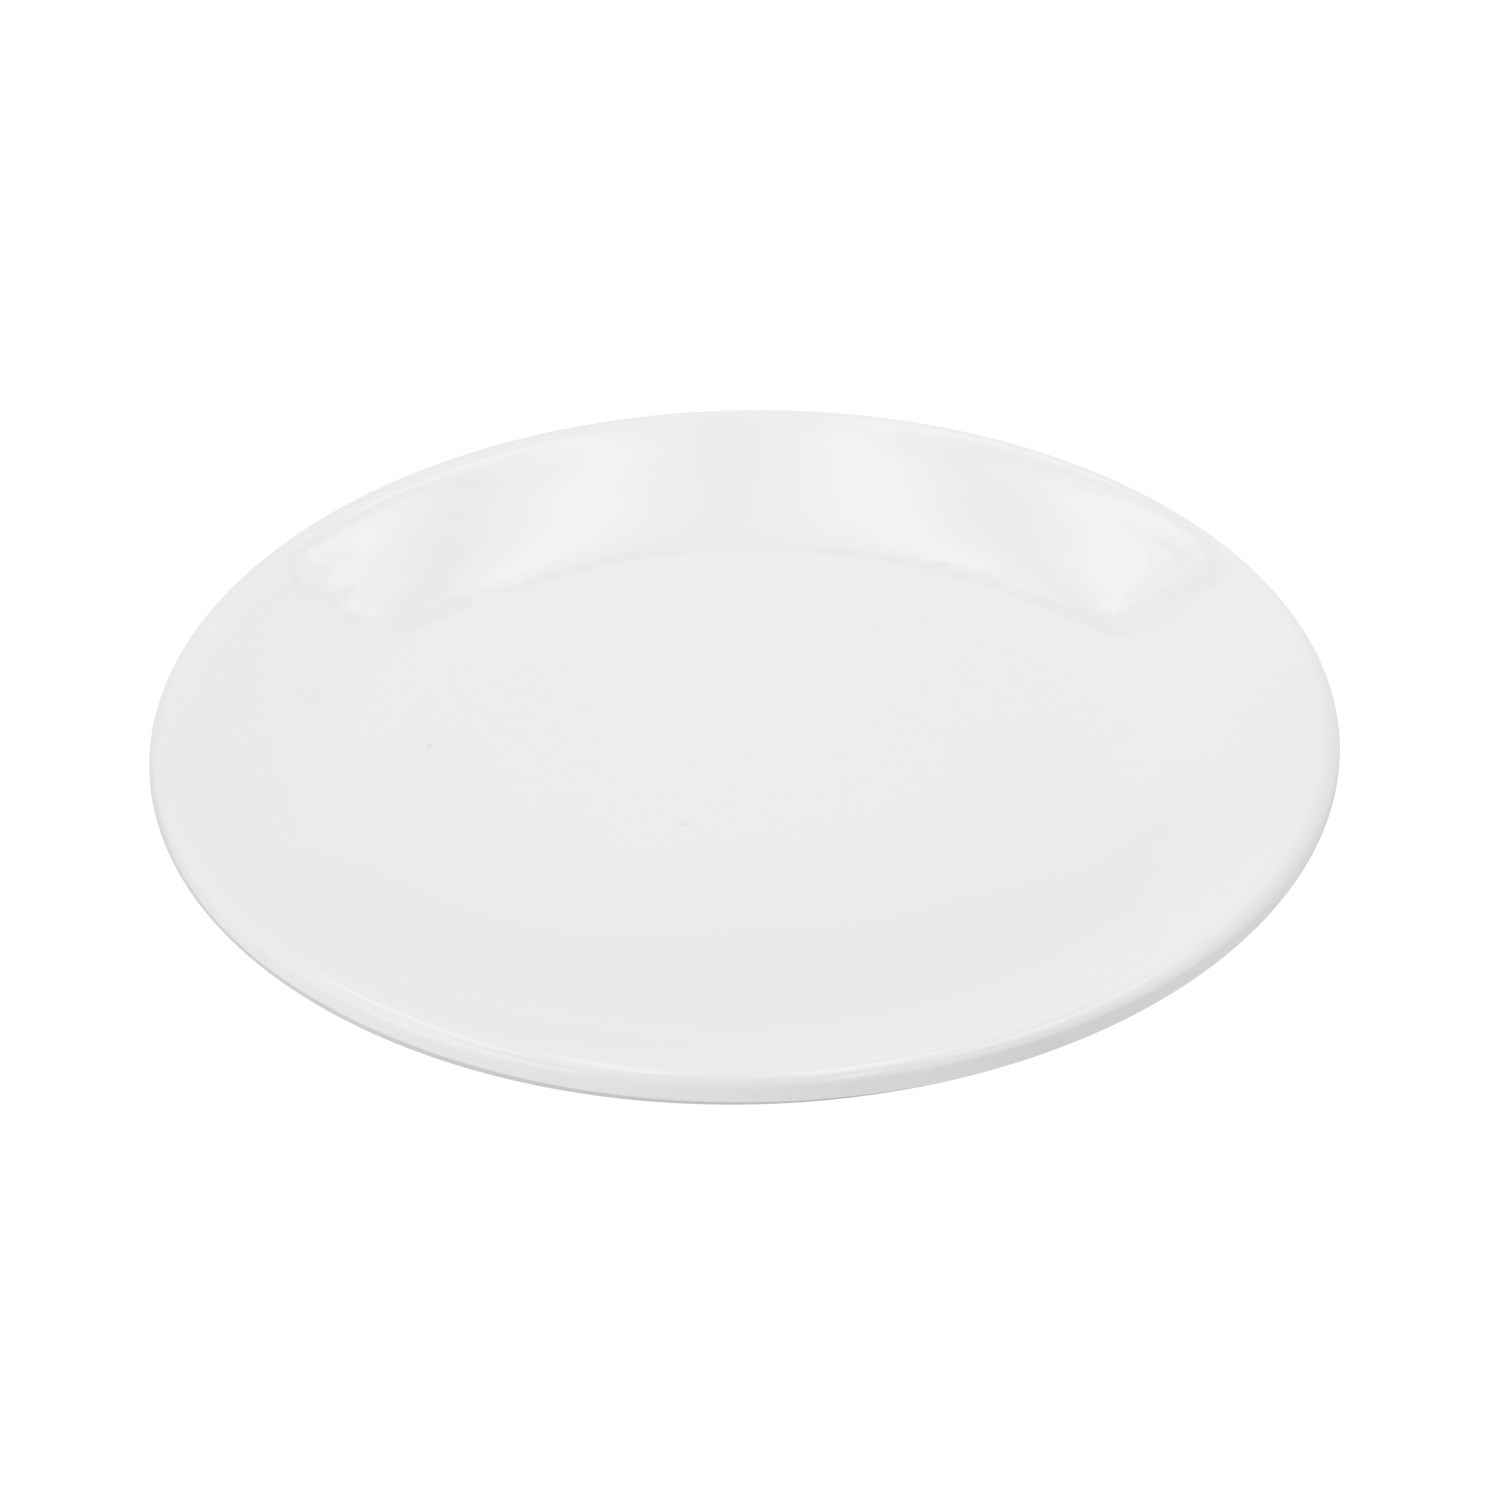 Dinewell Melamine Side Plate